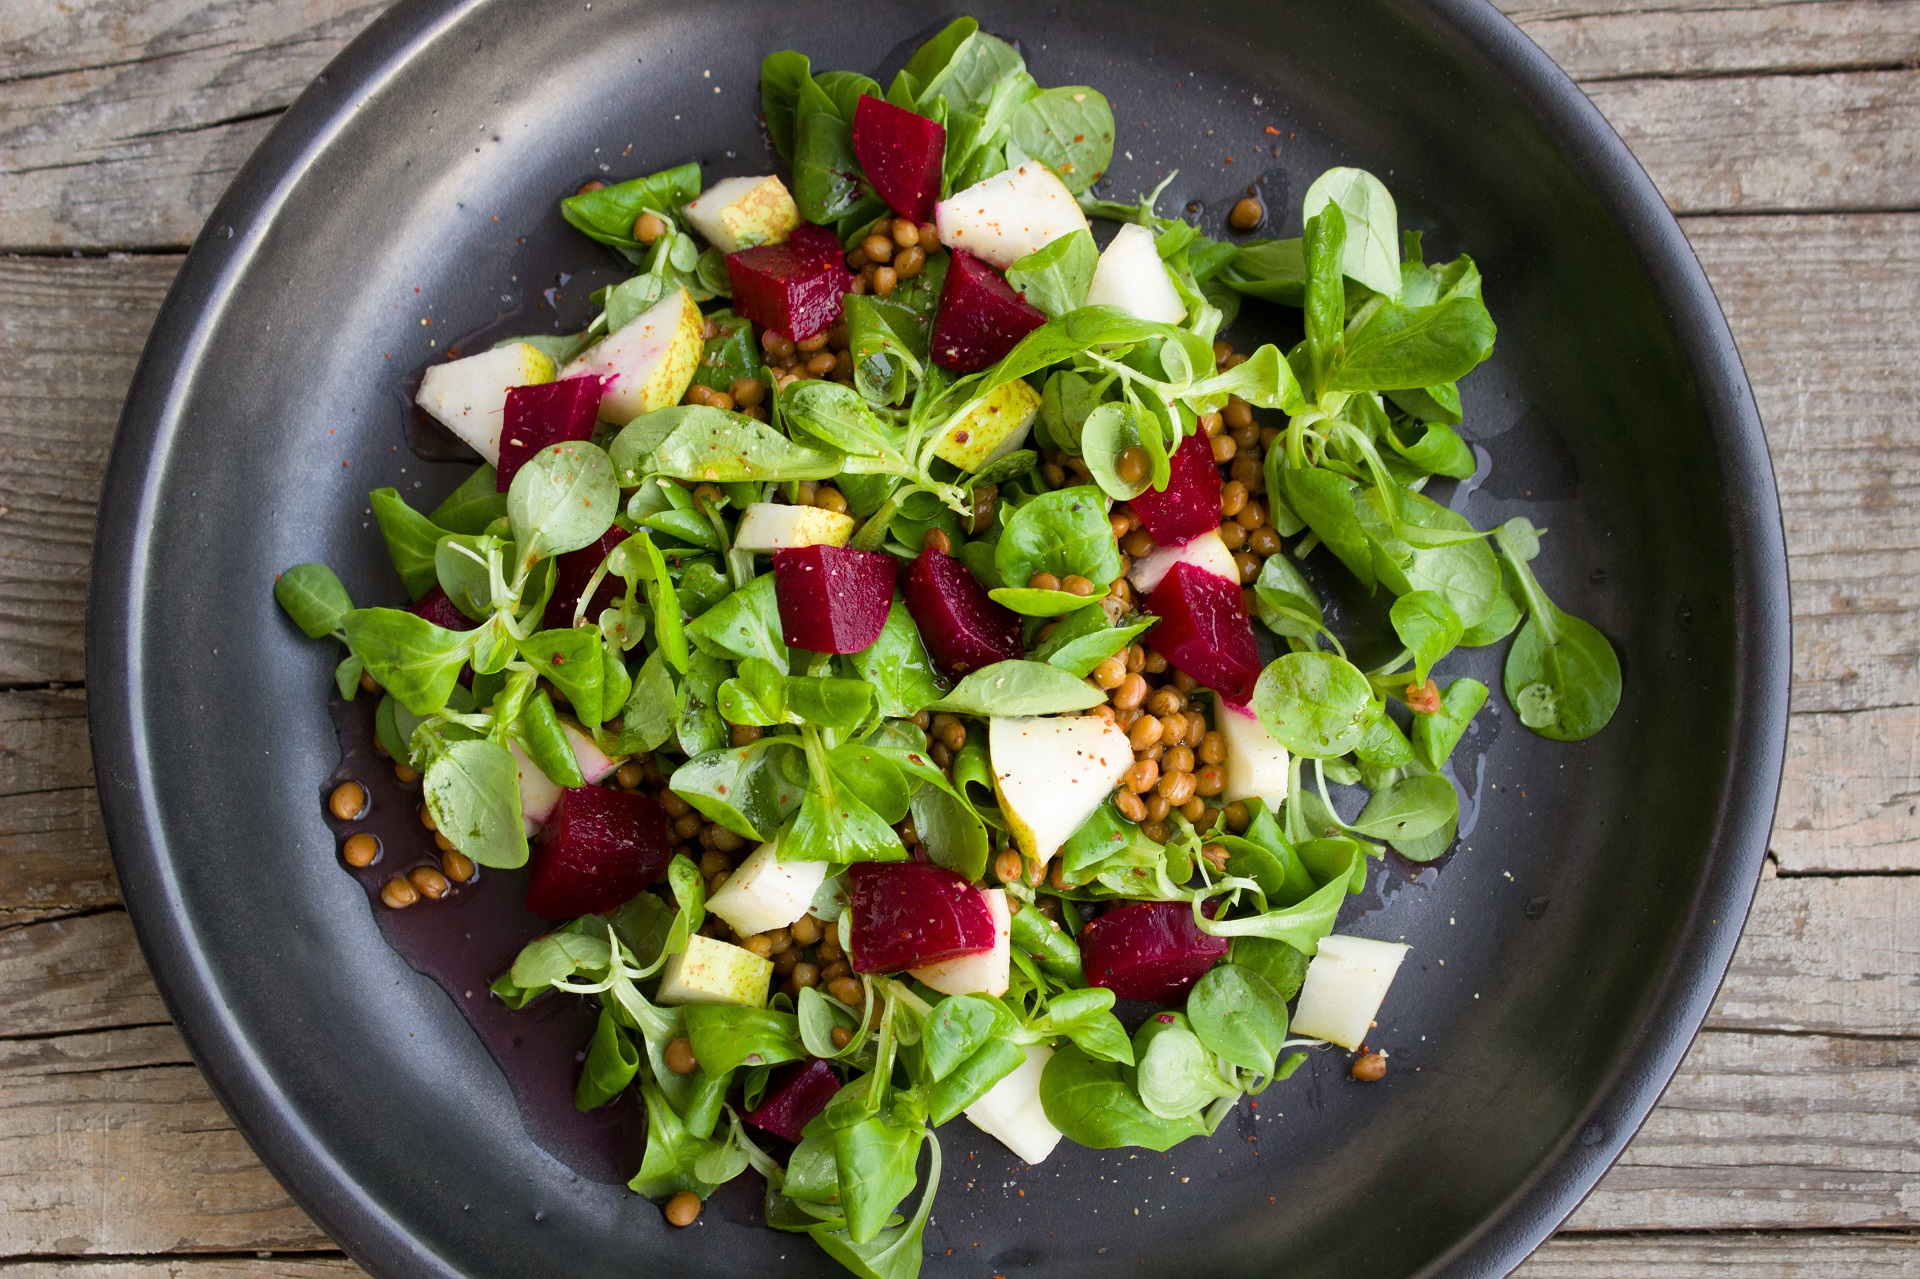 Salads add antioxidants.